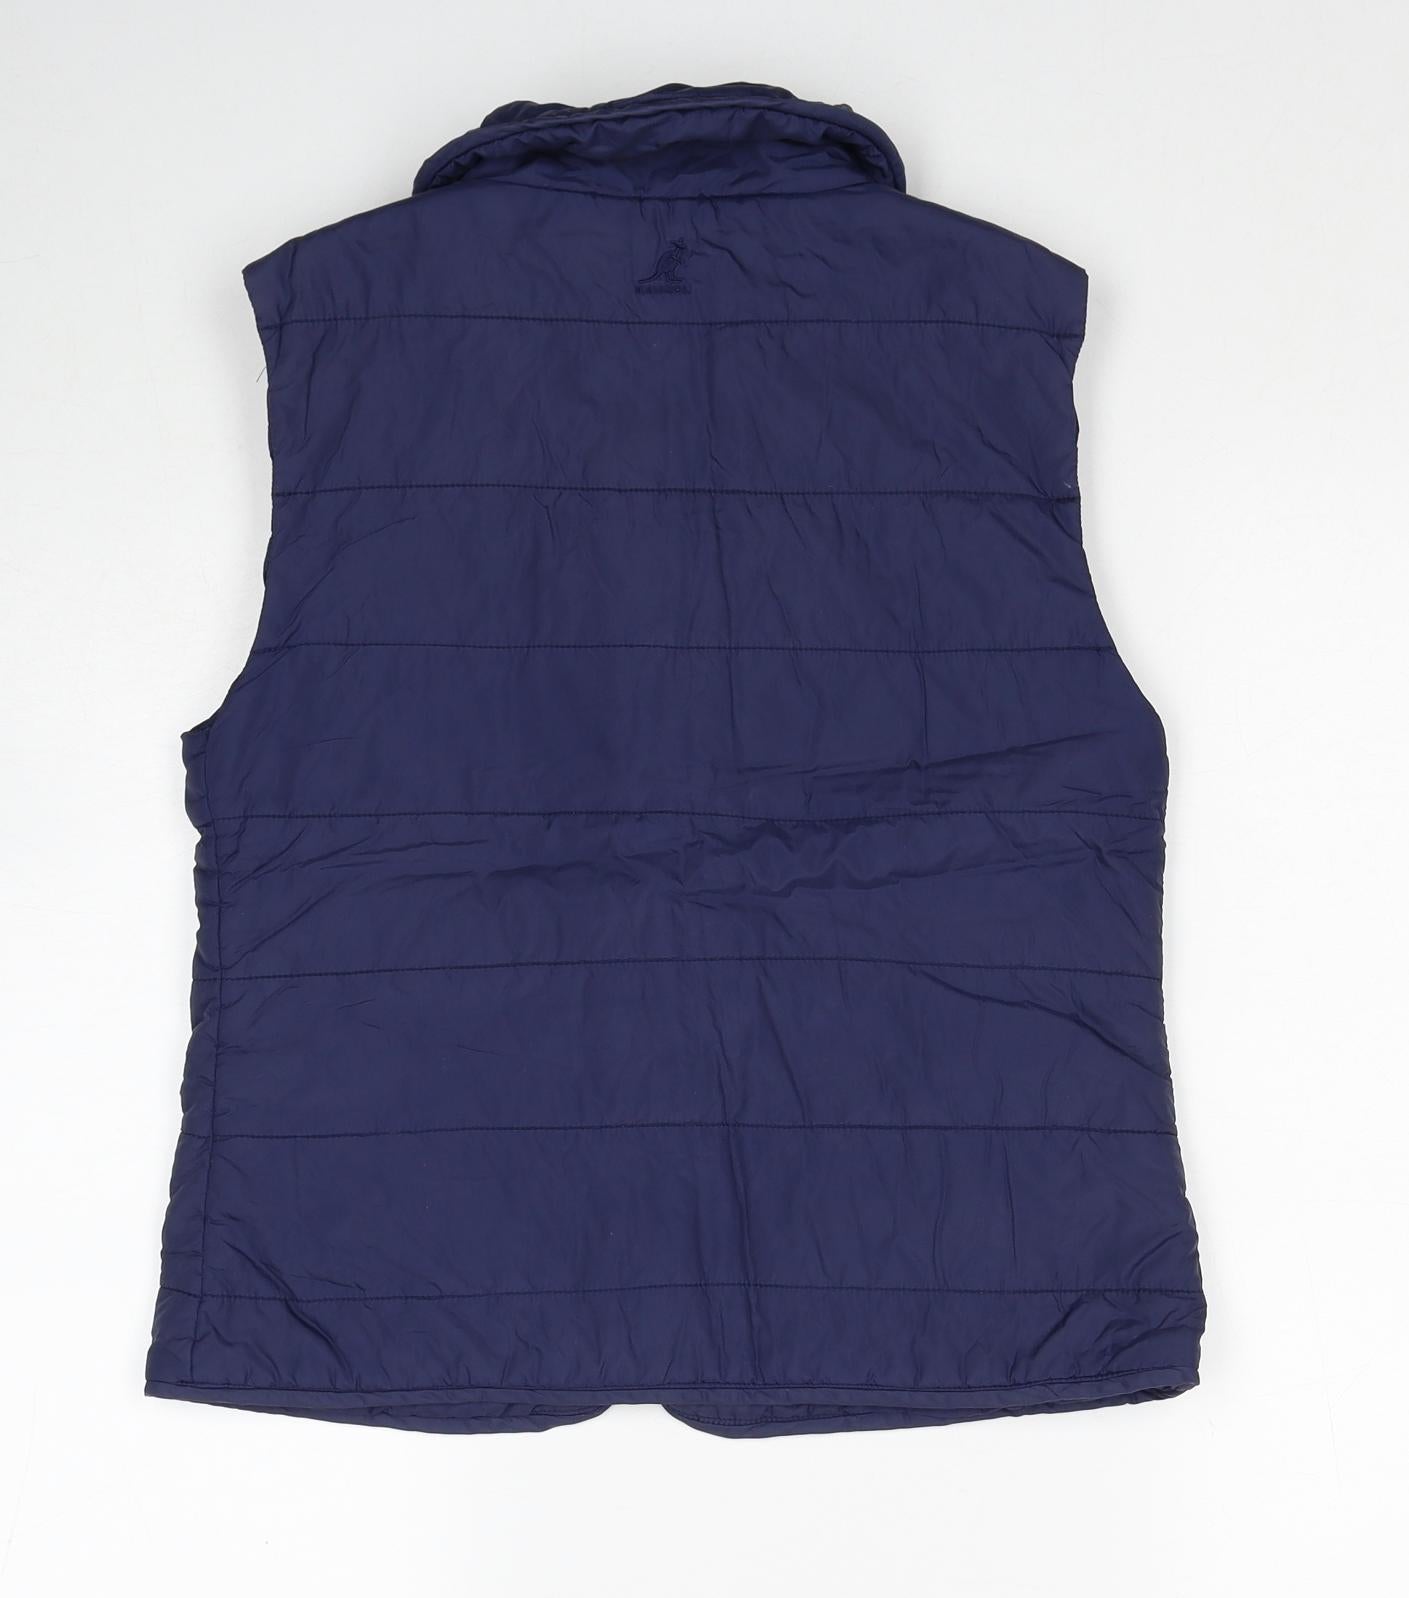 Kangol Womens Blue Gilet Jacket Size M Zip